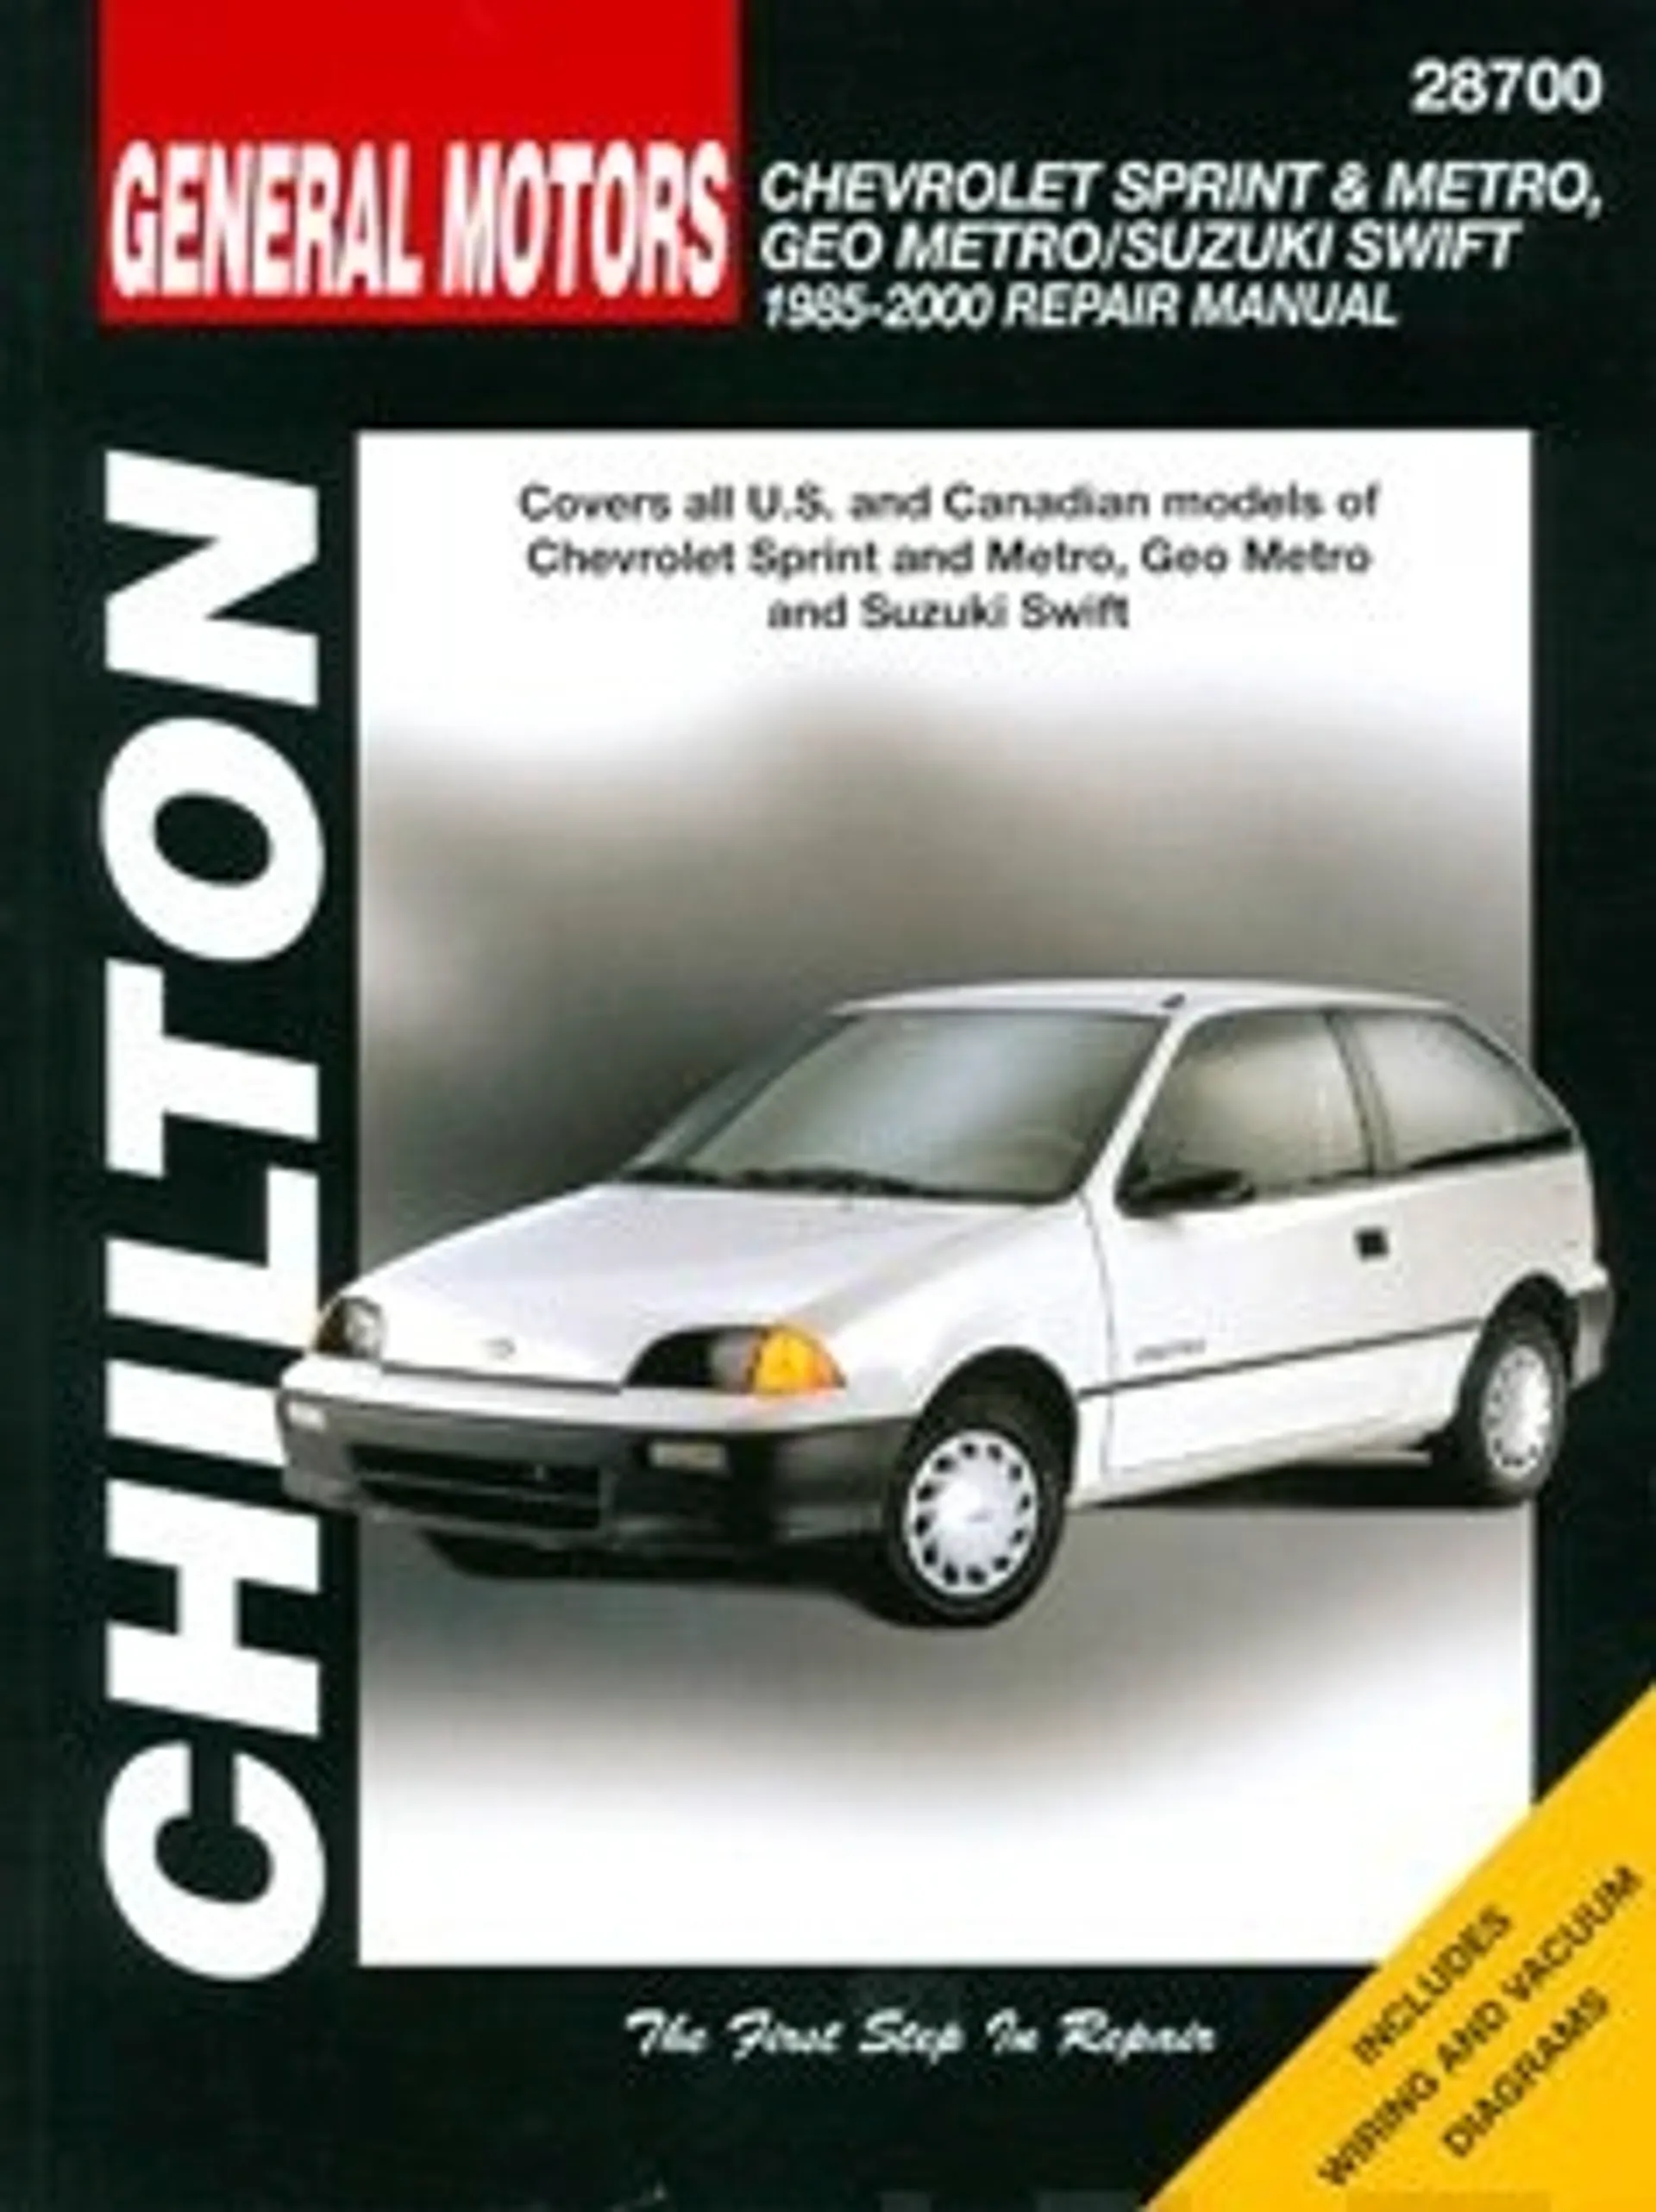 General motors Chevrolet Sprint & Metro